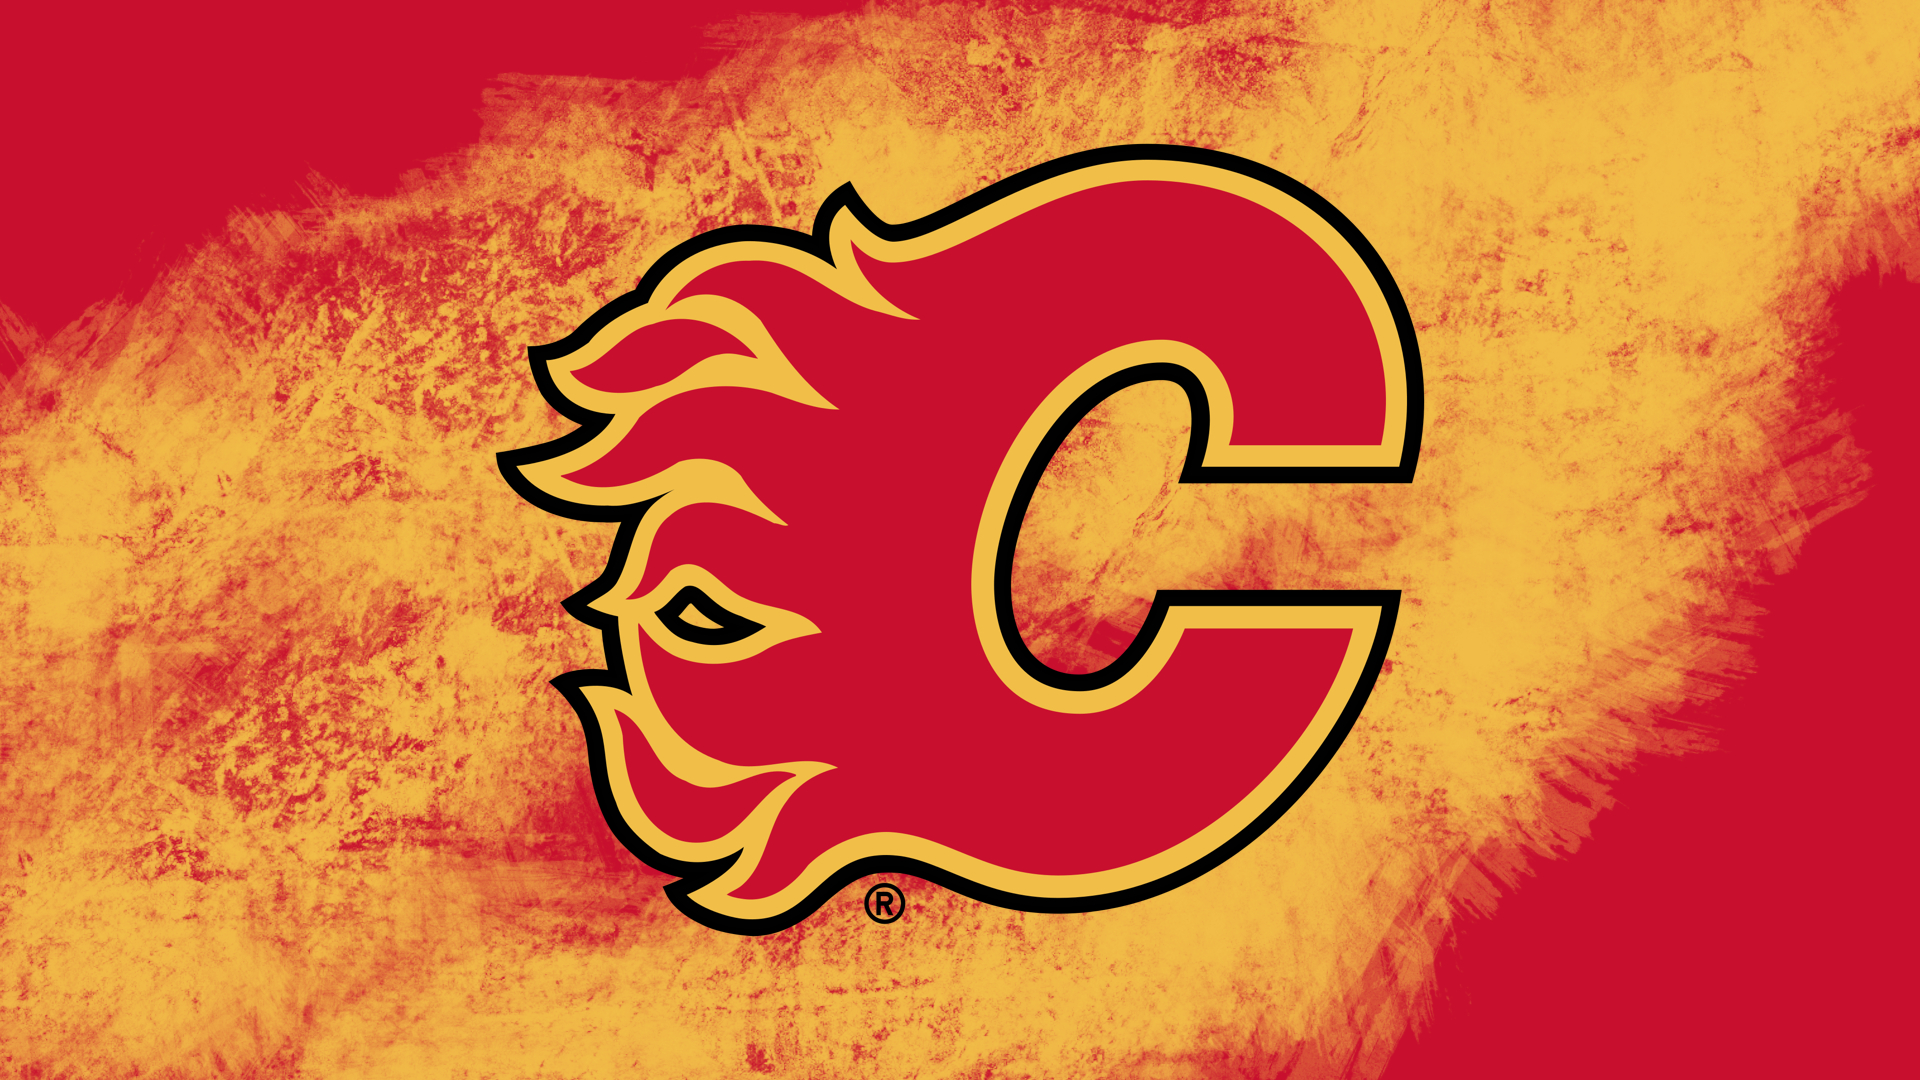 Calgary Flames - Husky by goodtimesroll44 on DeviantArt